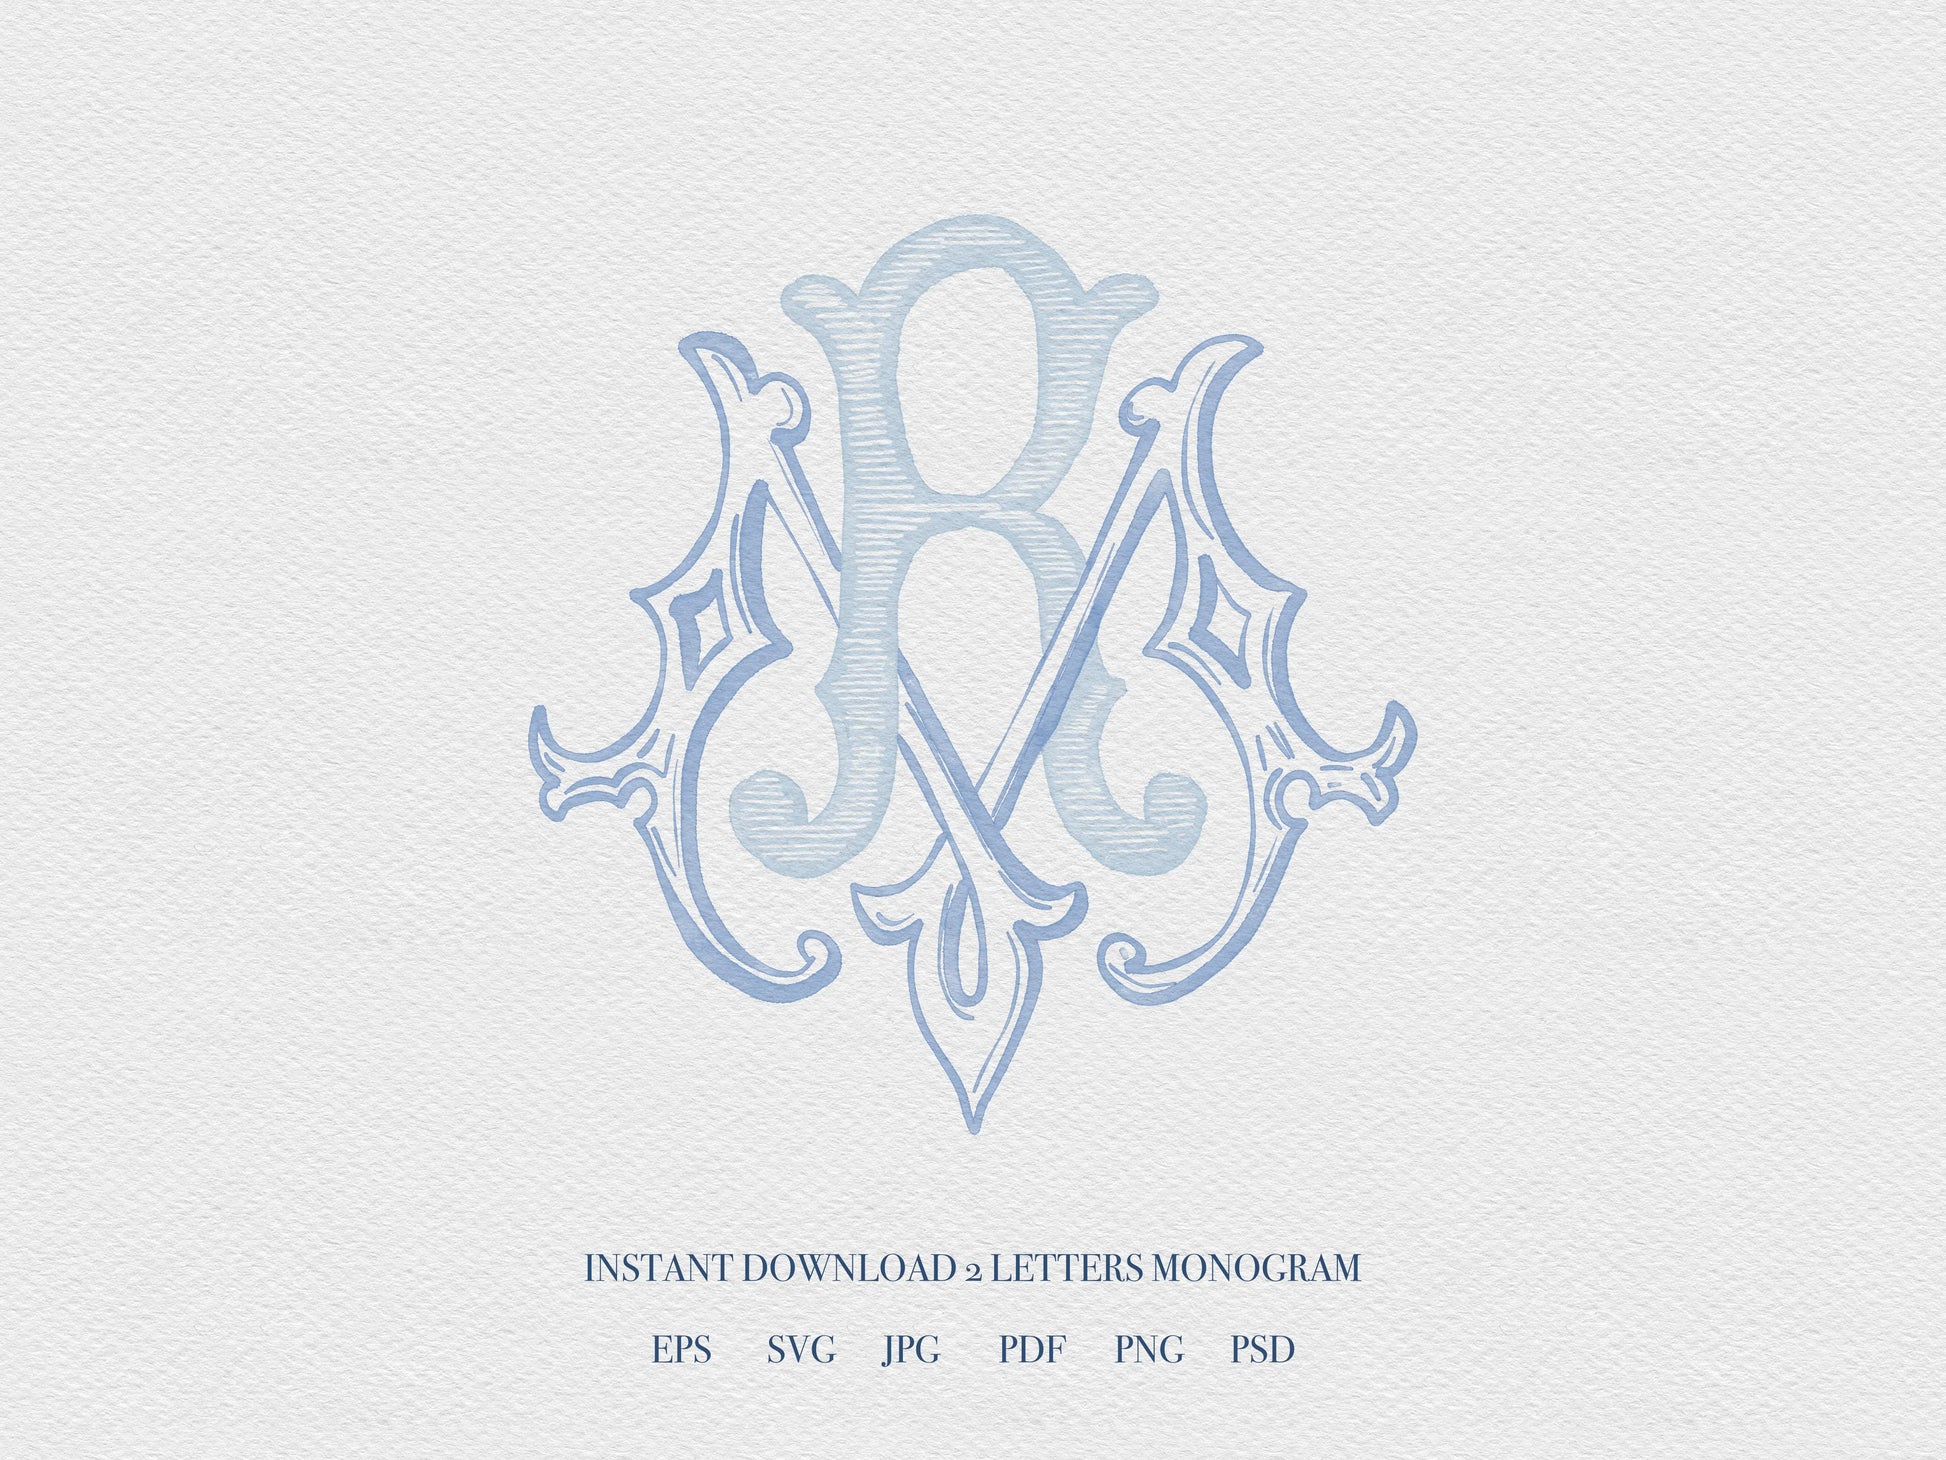 2 Letter Monogram with Letters RM | Digital Download - Wedding Monogram SVG, Personal Logo, Wedding Logo for Wedding Invitations The Wedding Crest Lab